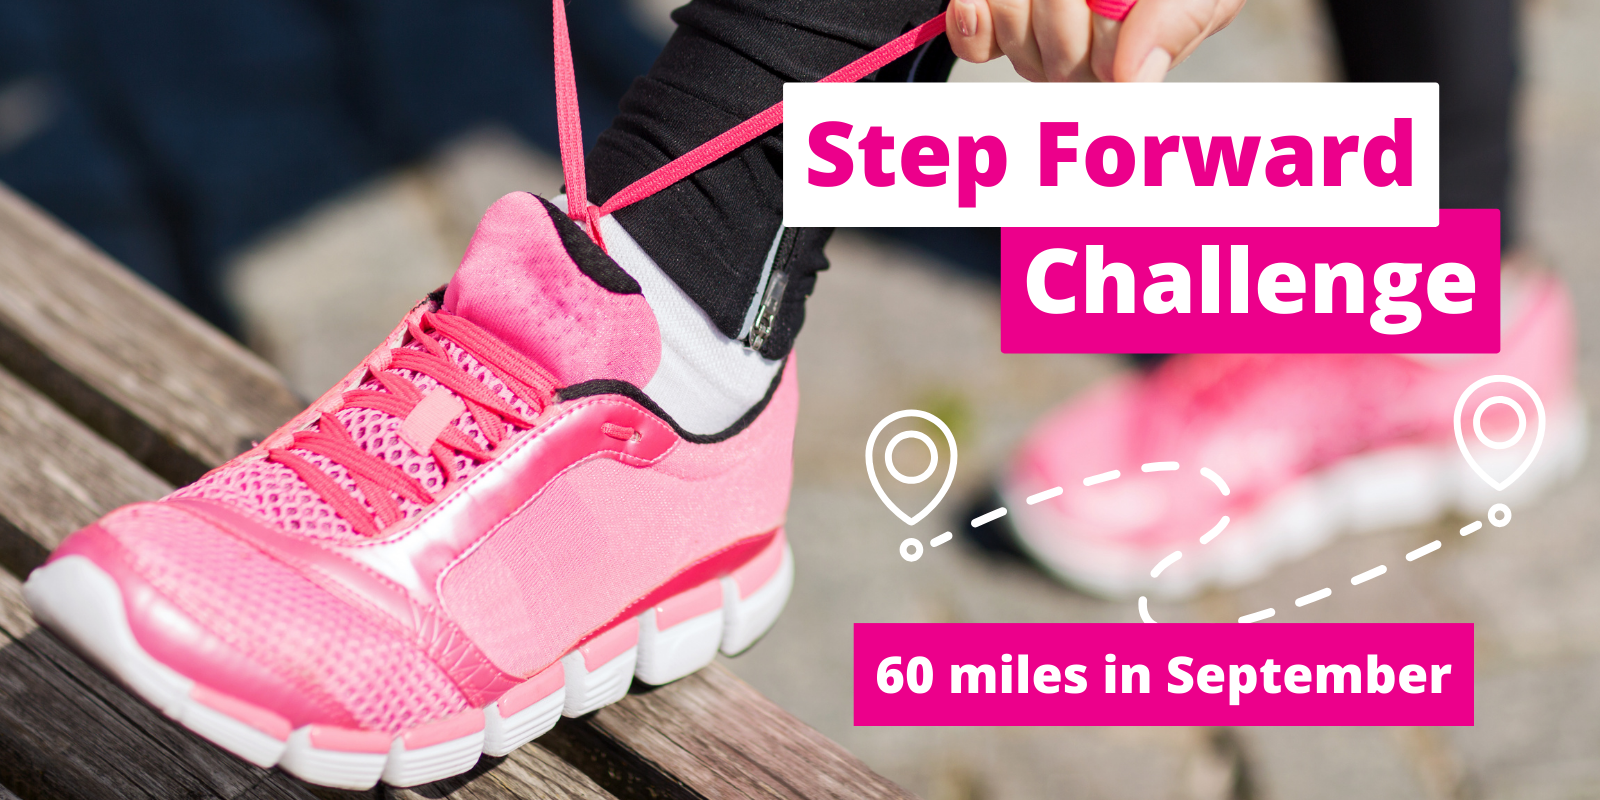 Step Forward Challenge. 60 miles in September.